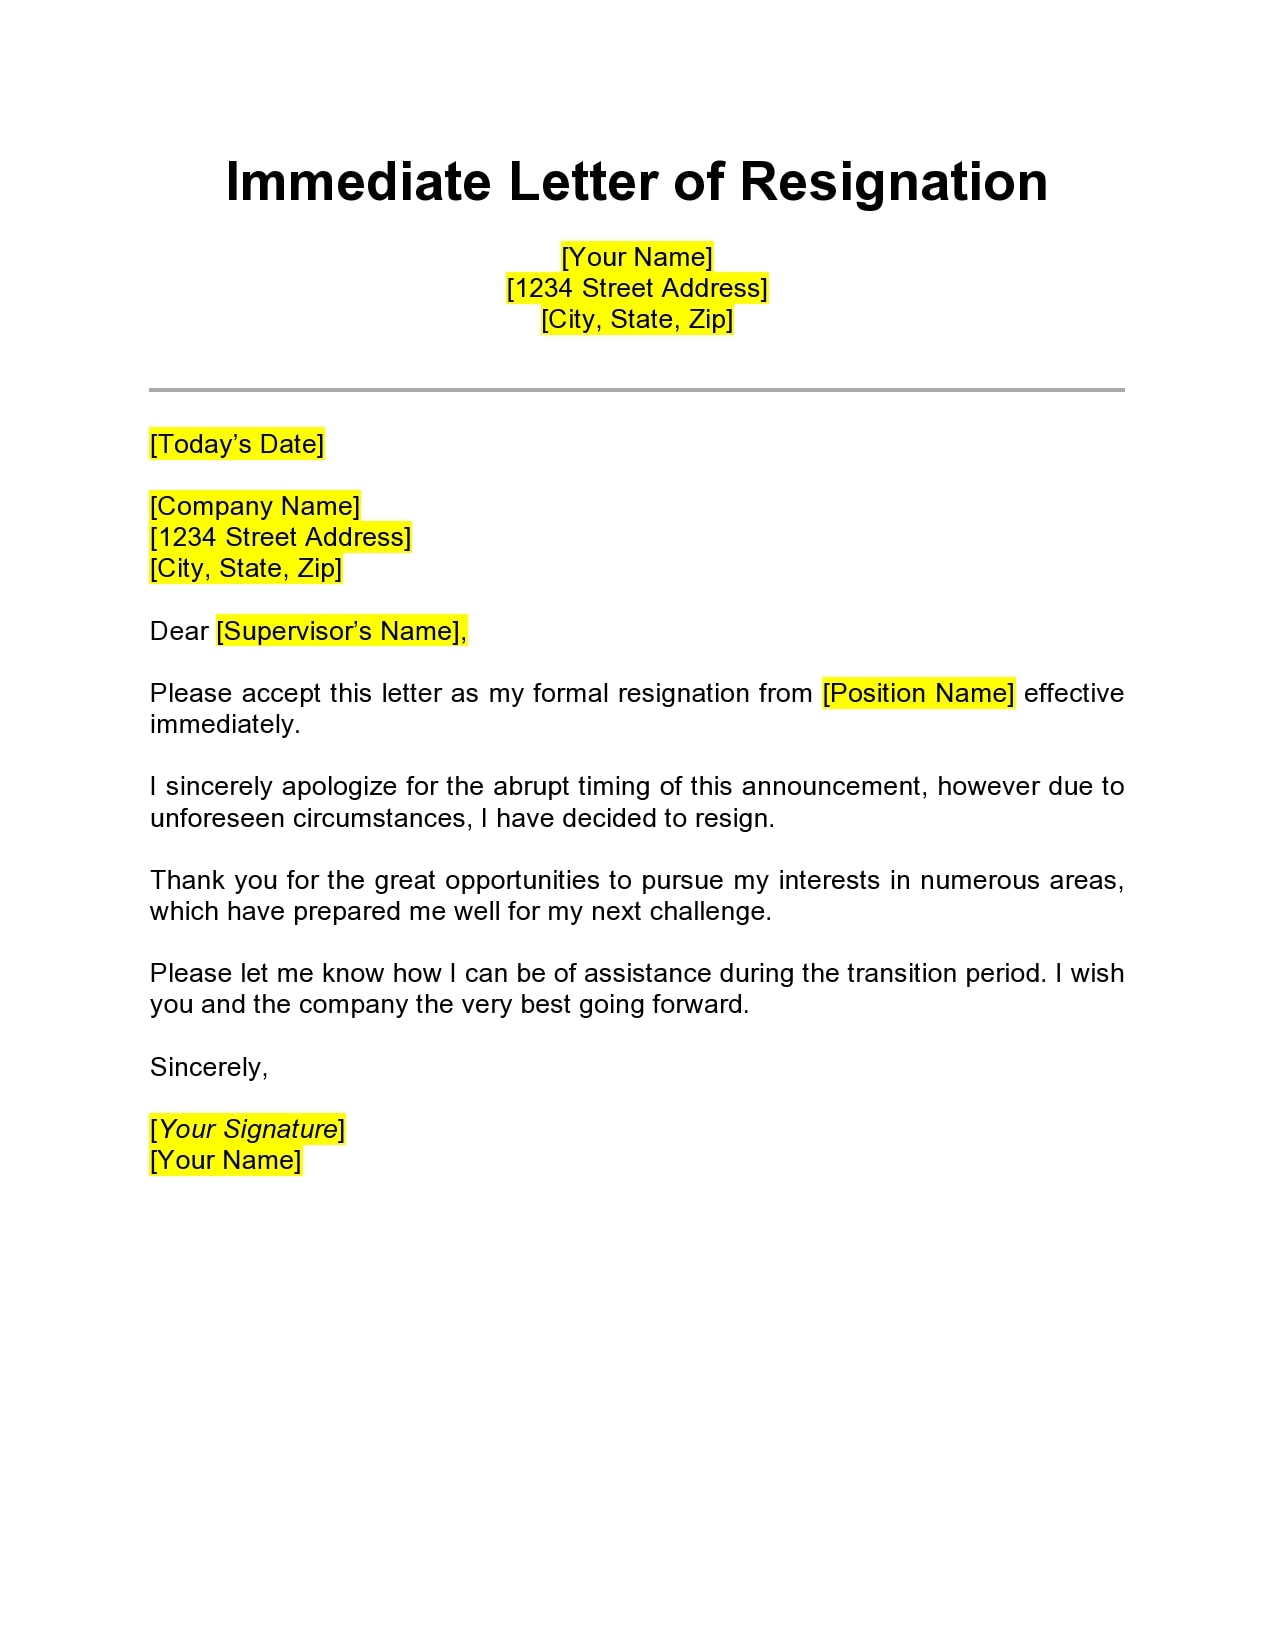 29-immediate-resignation-letters-free-samples